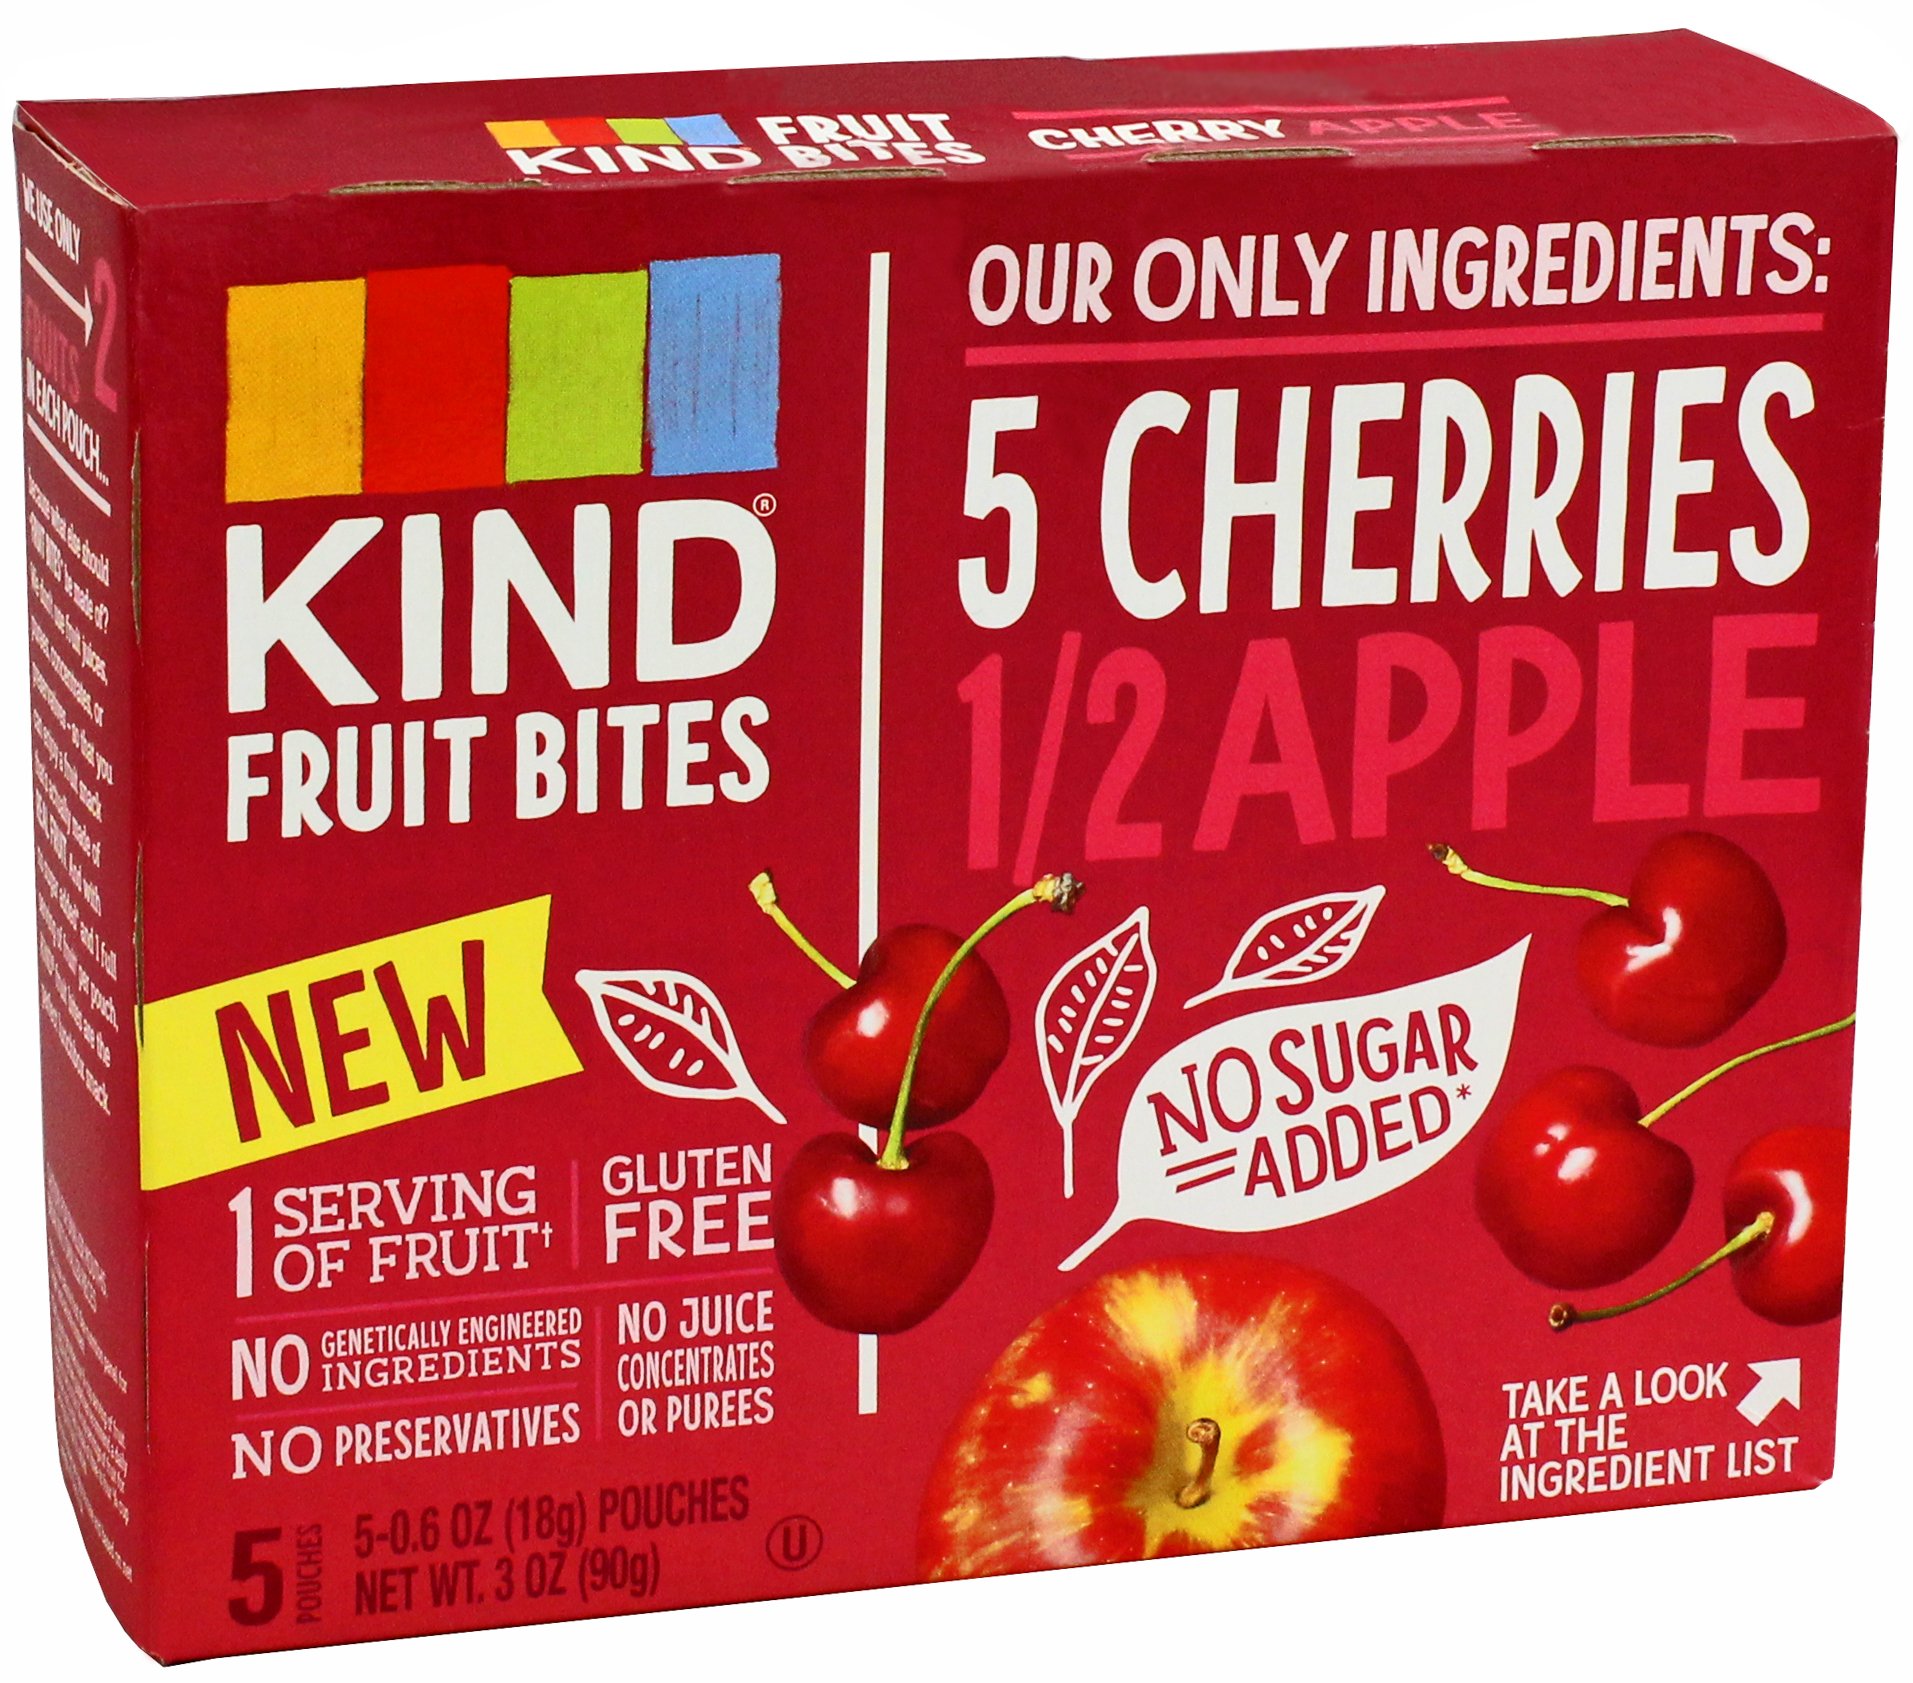 Kind Fruit Bites Cherry Apple Snacks Shop Fruit H-E-B at 